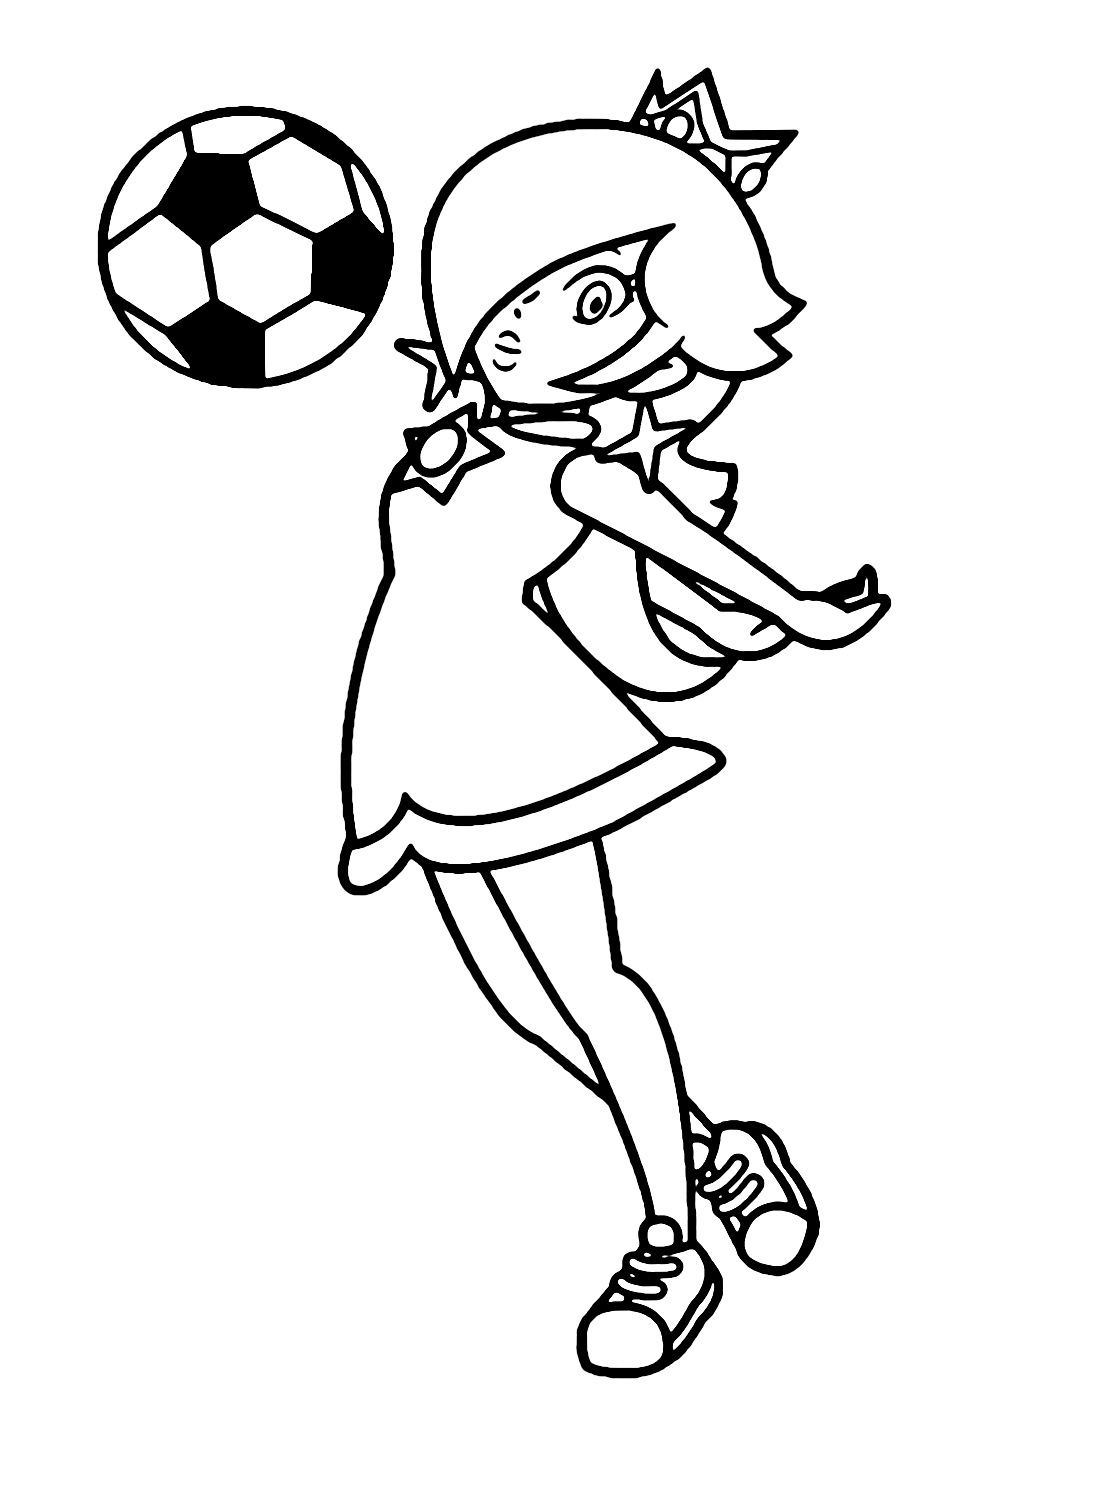 Rosalina playing Soccer Coloring Pages